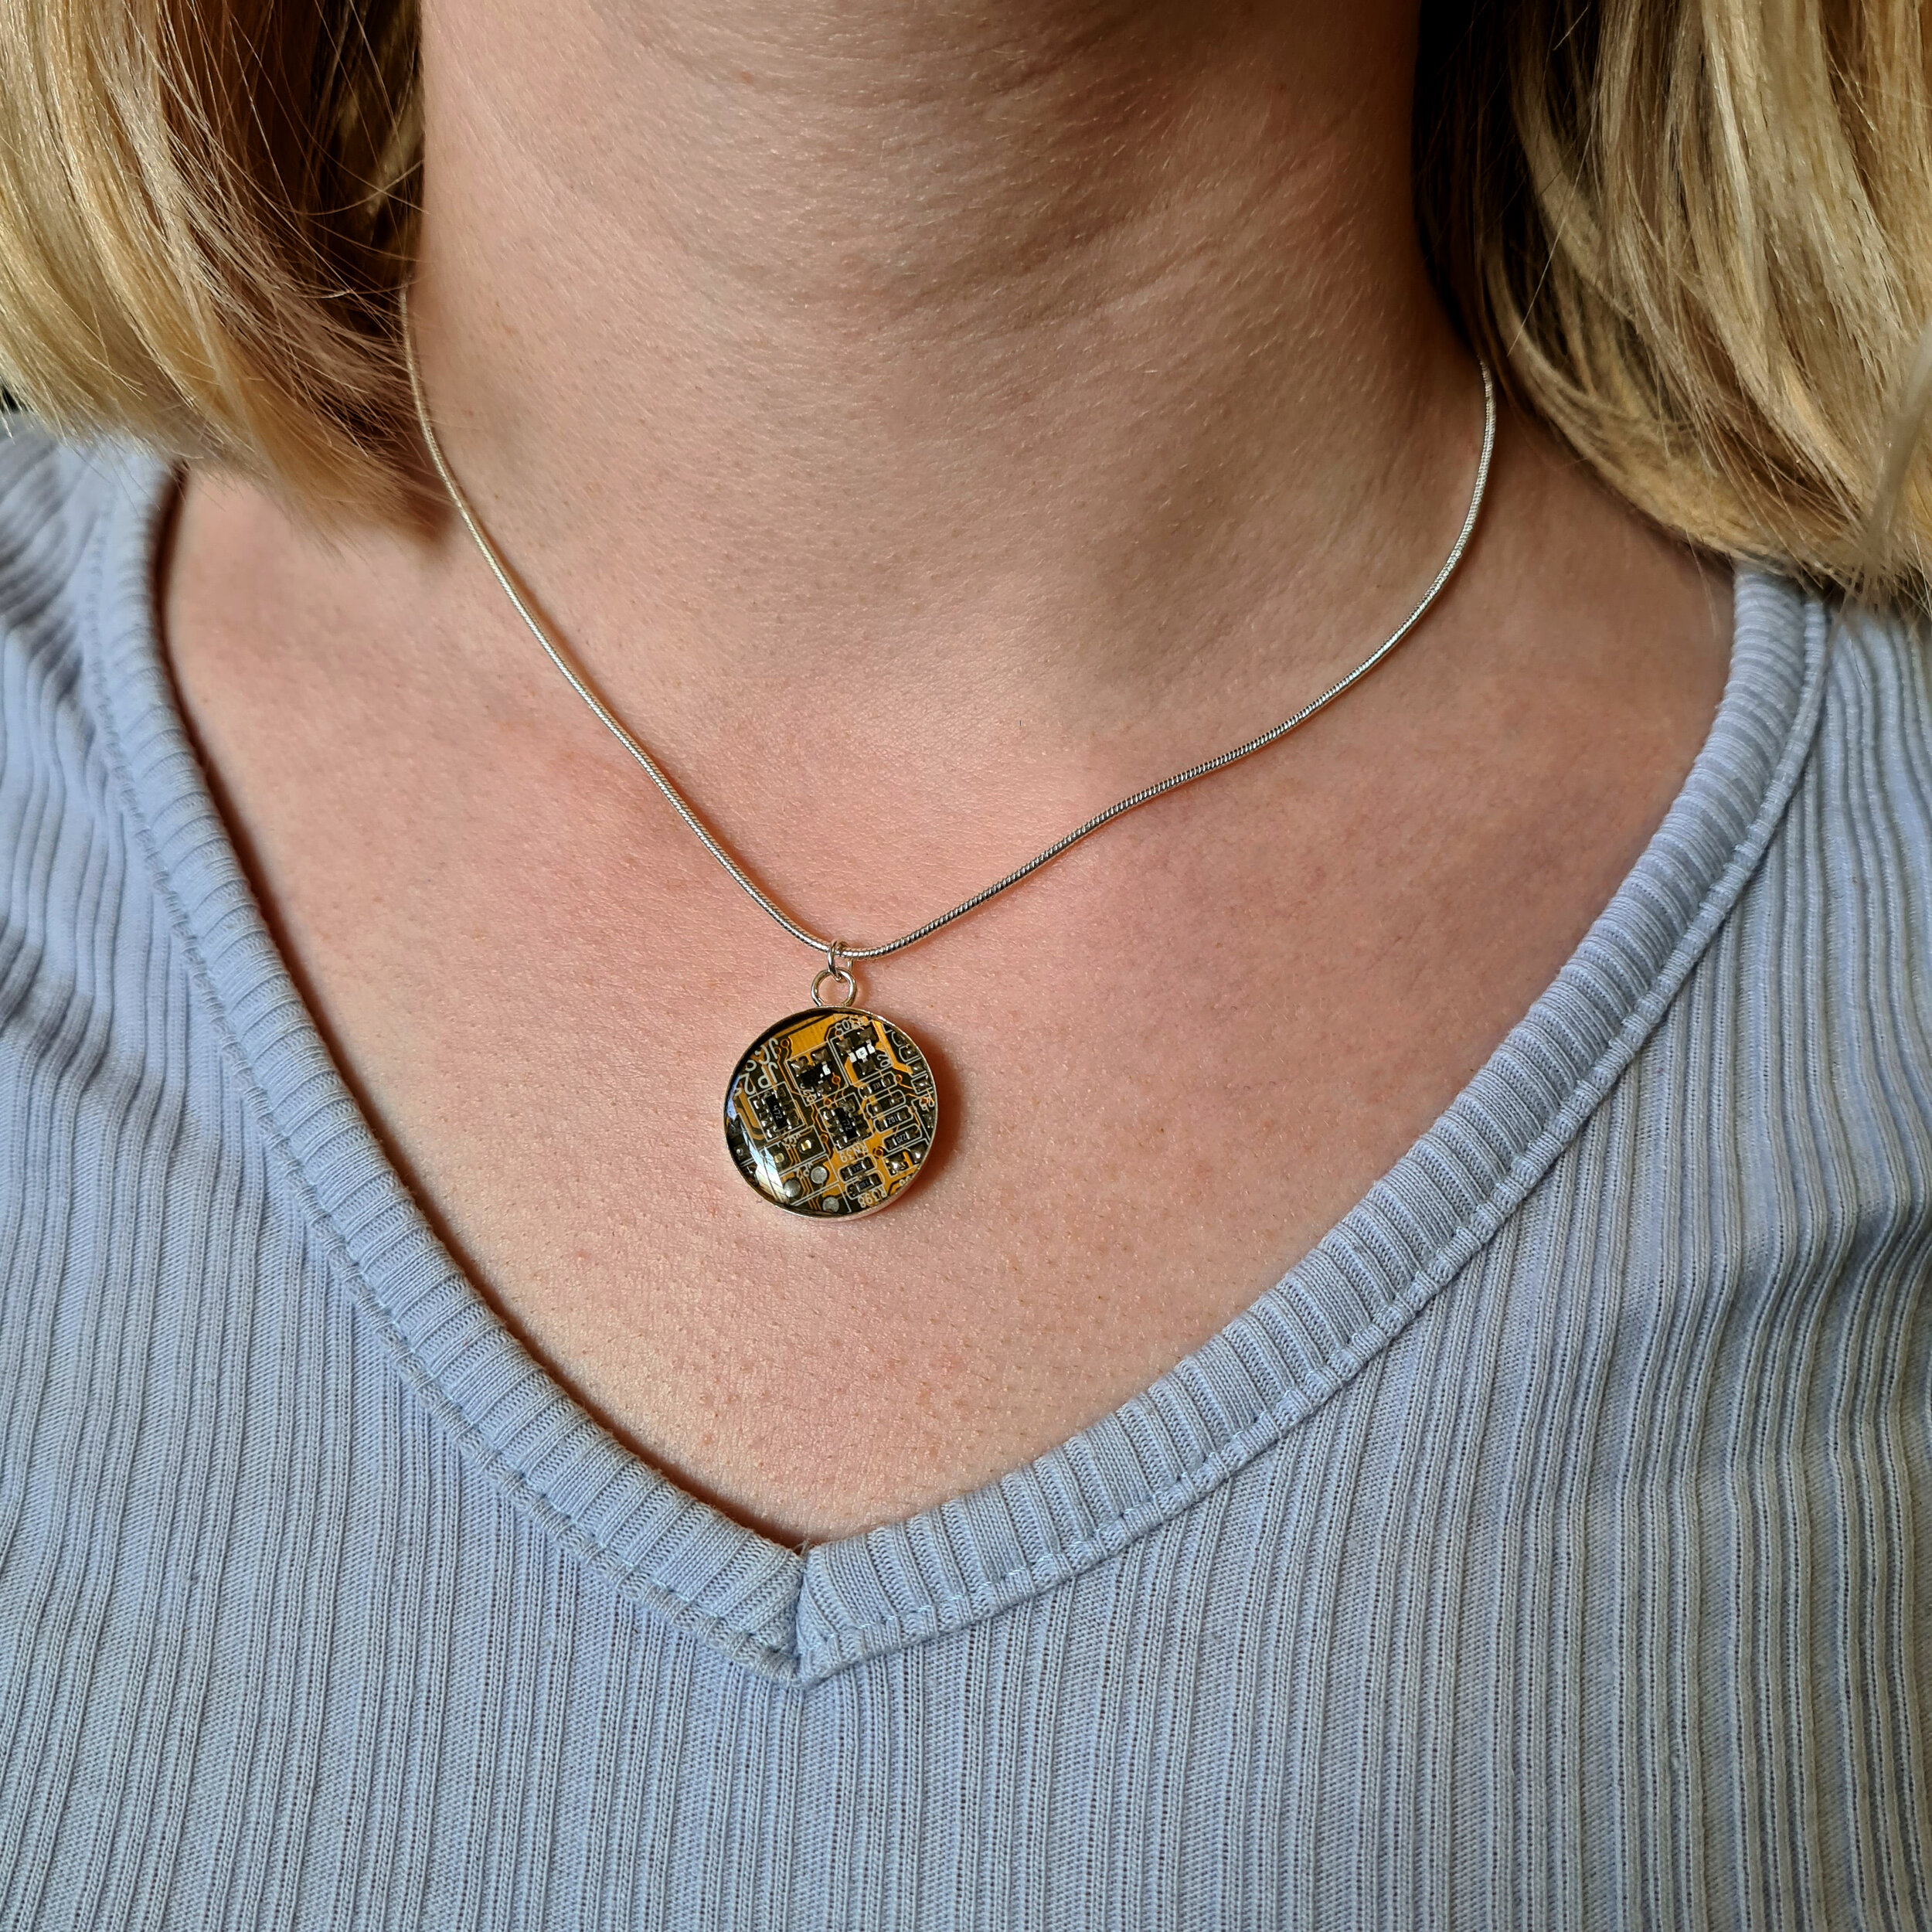 Yellow eco-friendly necklace around neck